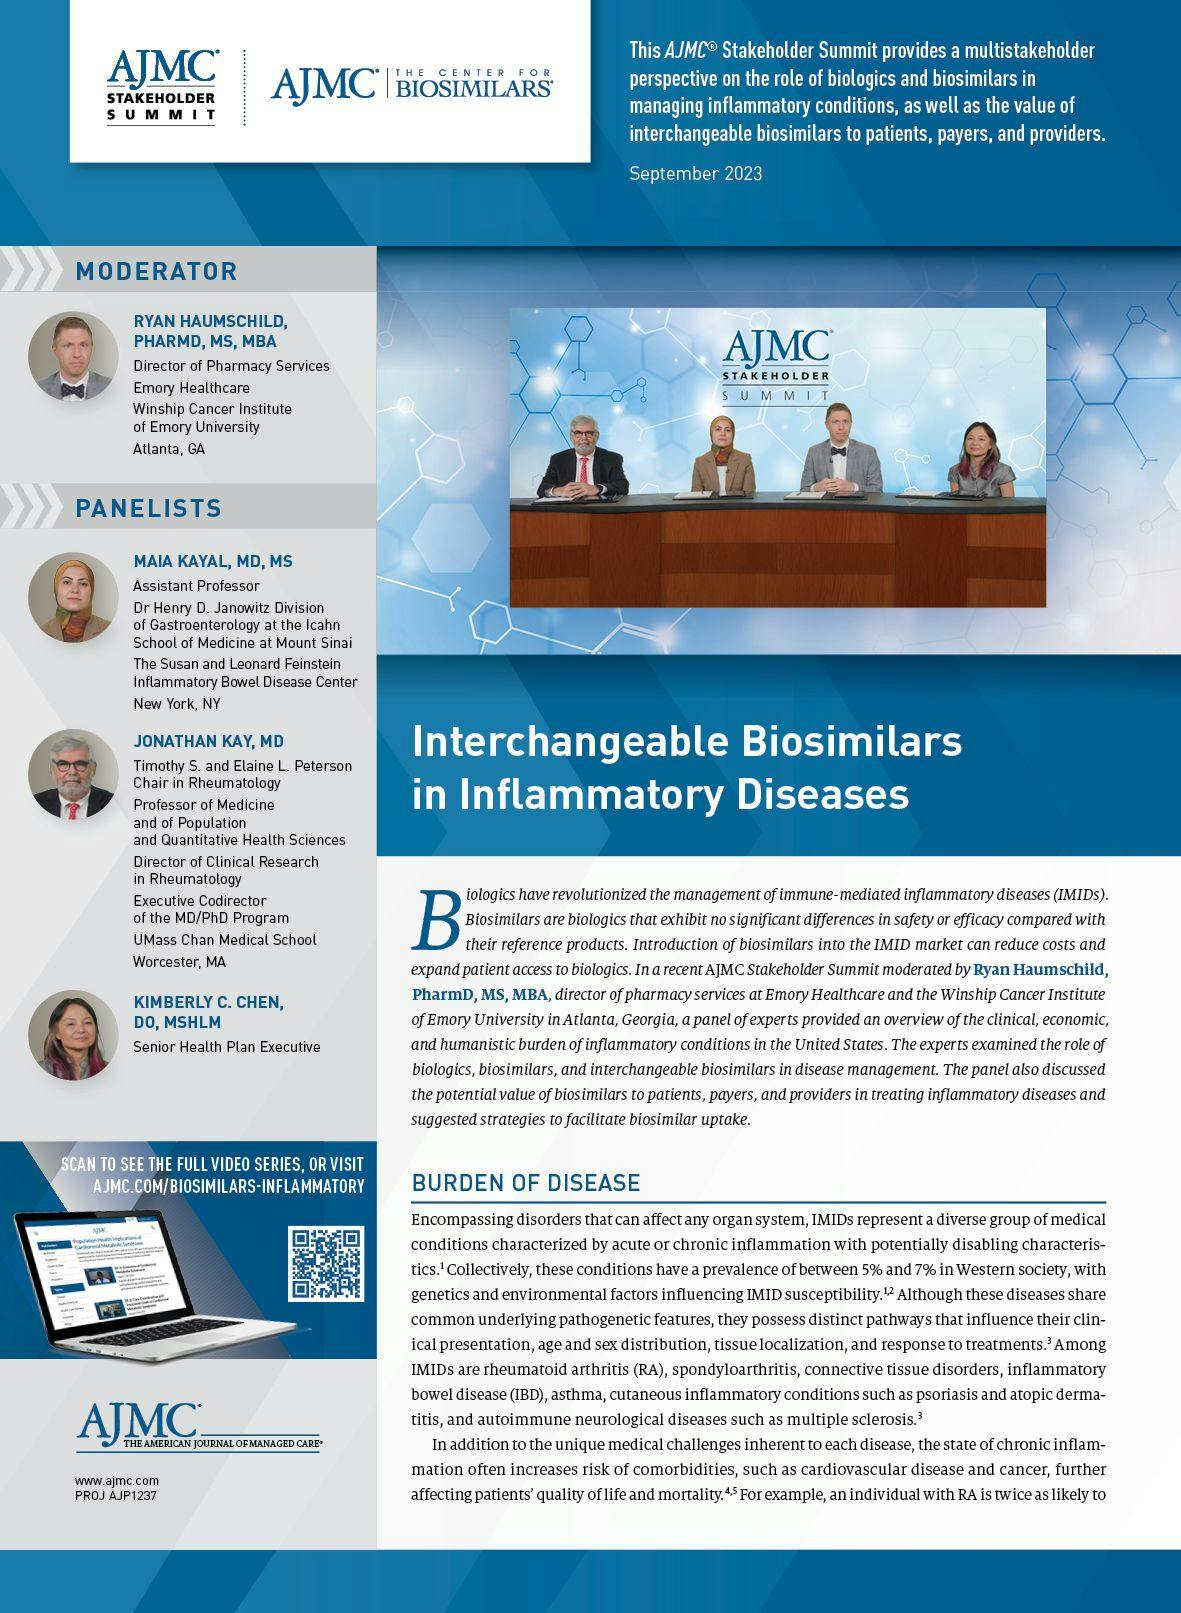 Interchangeable Biosimilars in Inflammatory Diseases